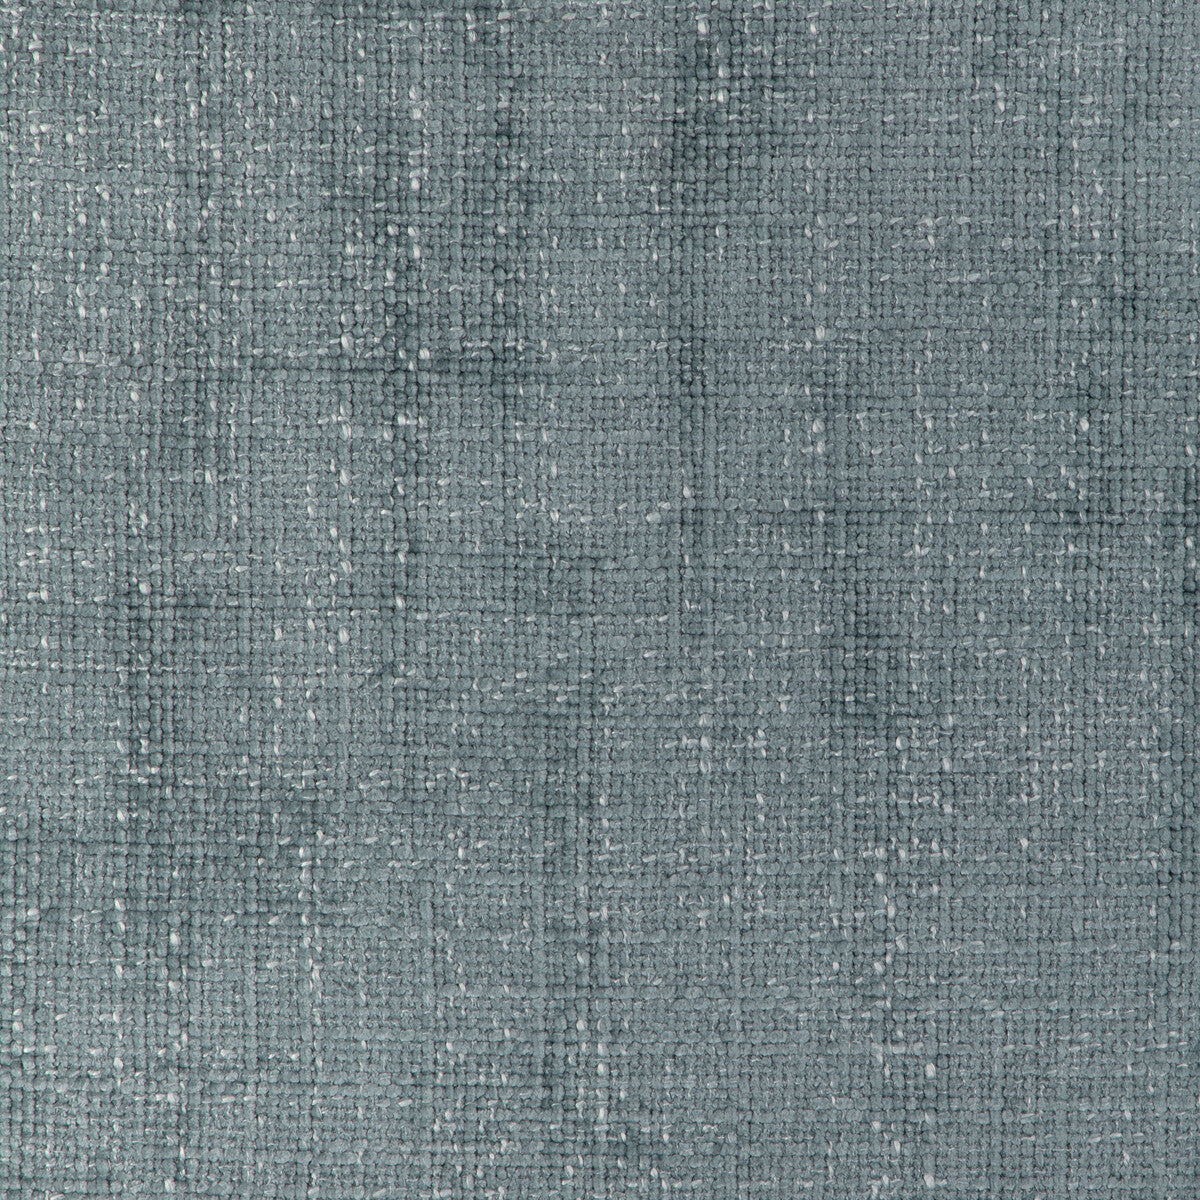 Kravet Smart fabric in 36677-511 color - pattern 36677.511.0 - by Kravet Smart in the Performance Kravetarmor collection